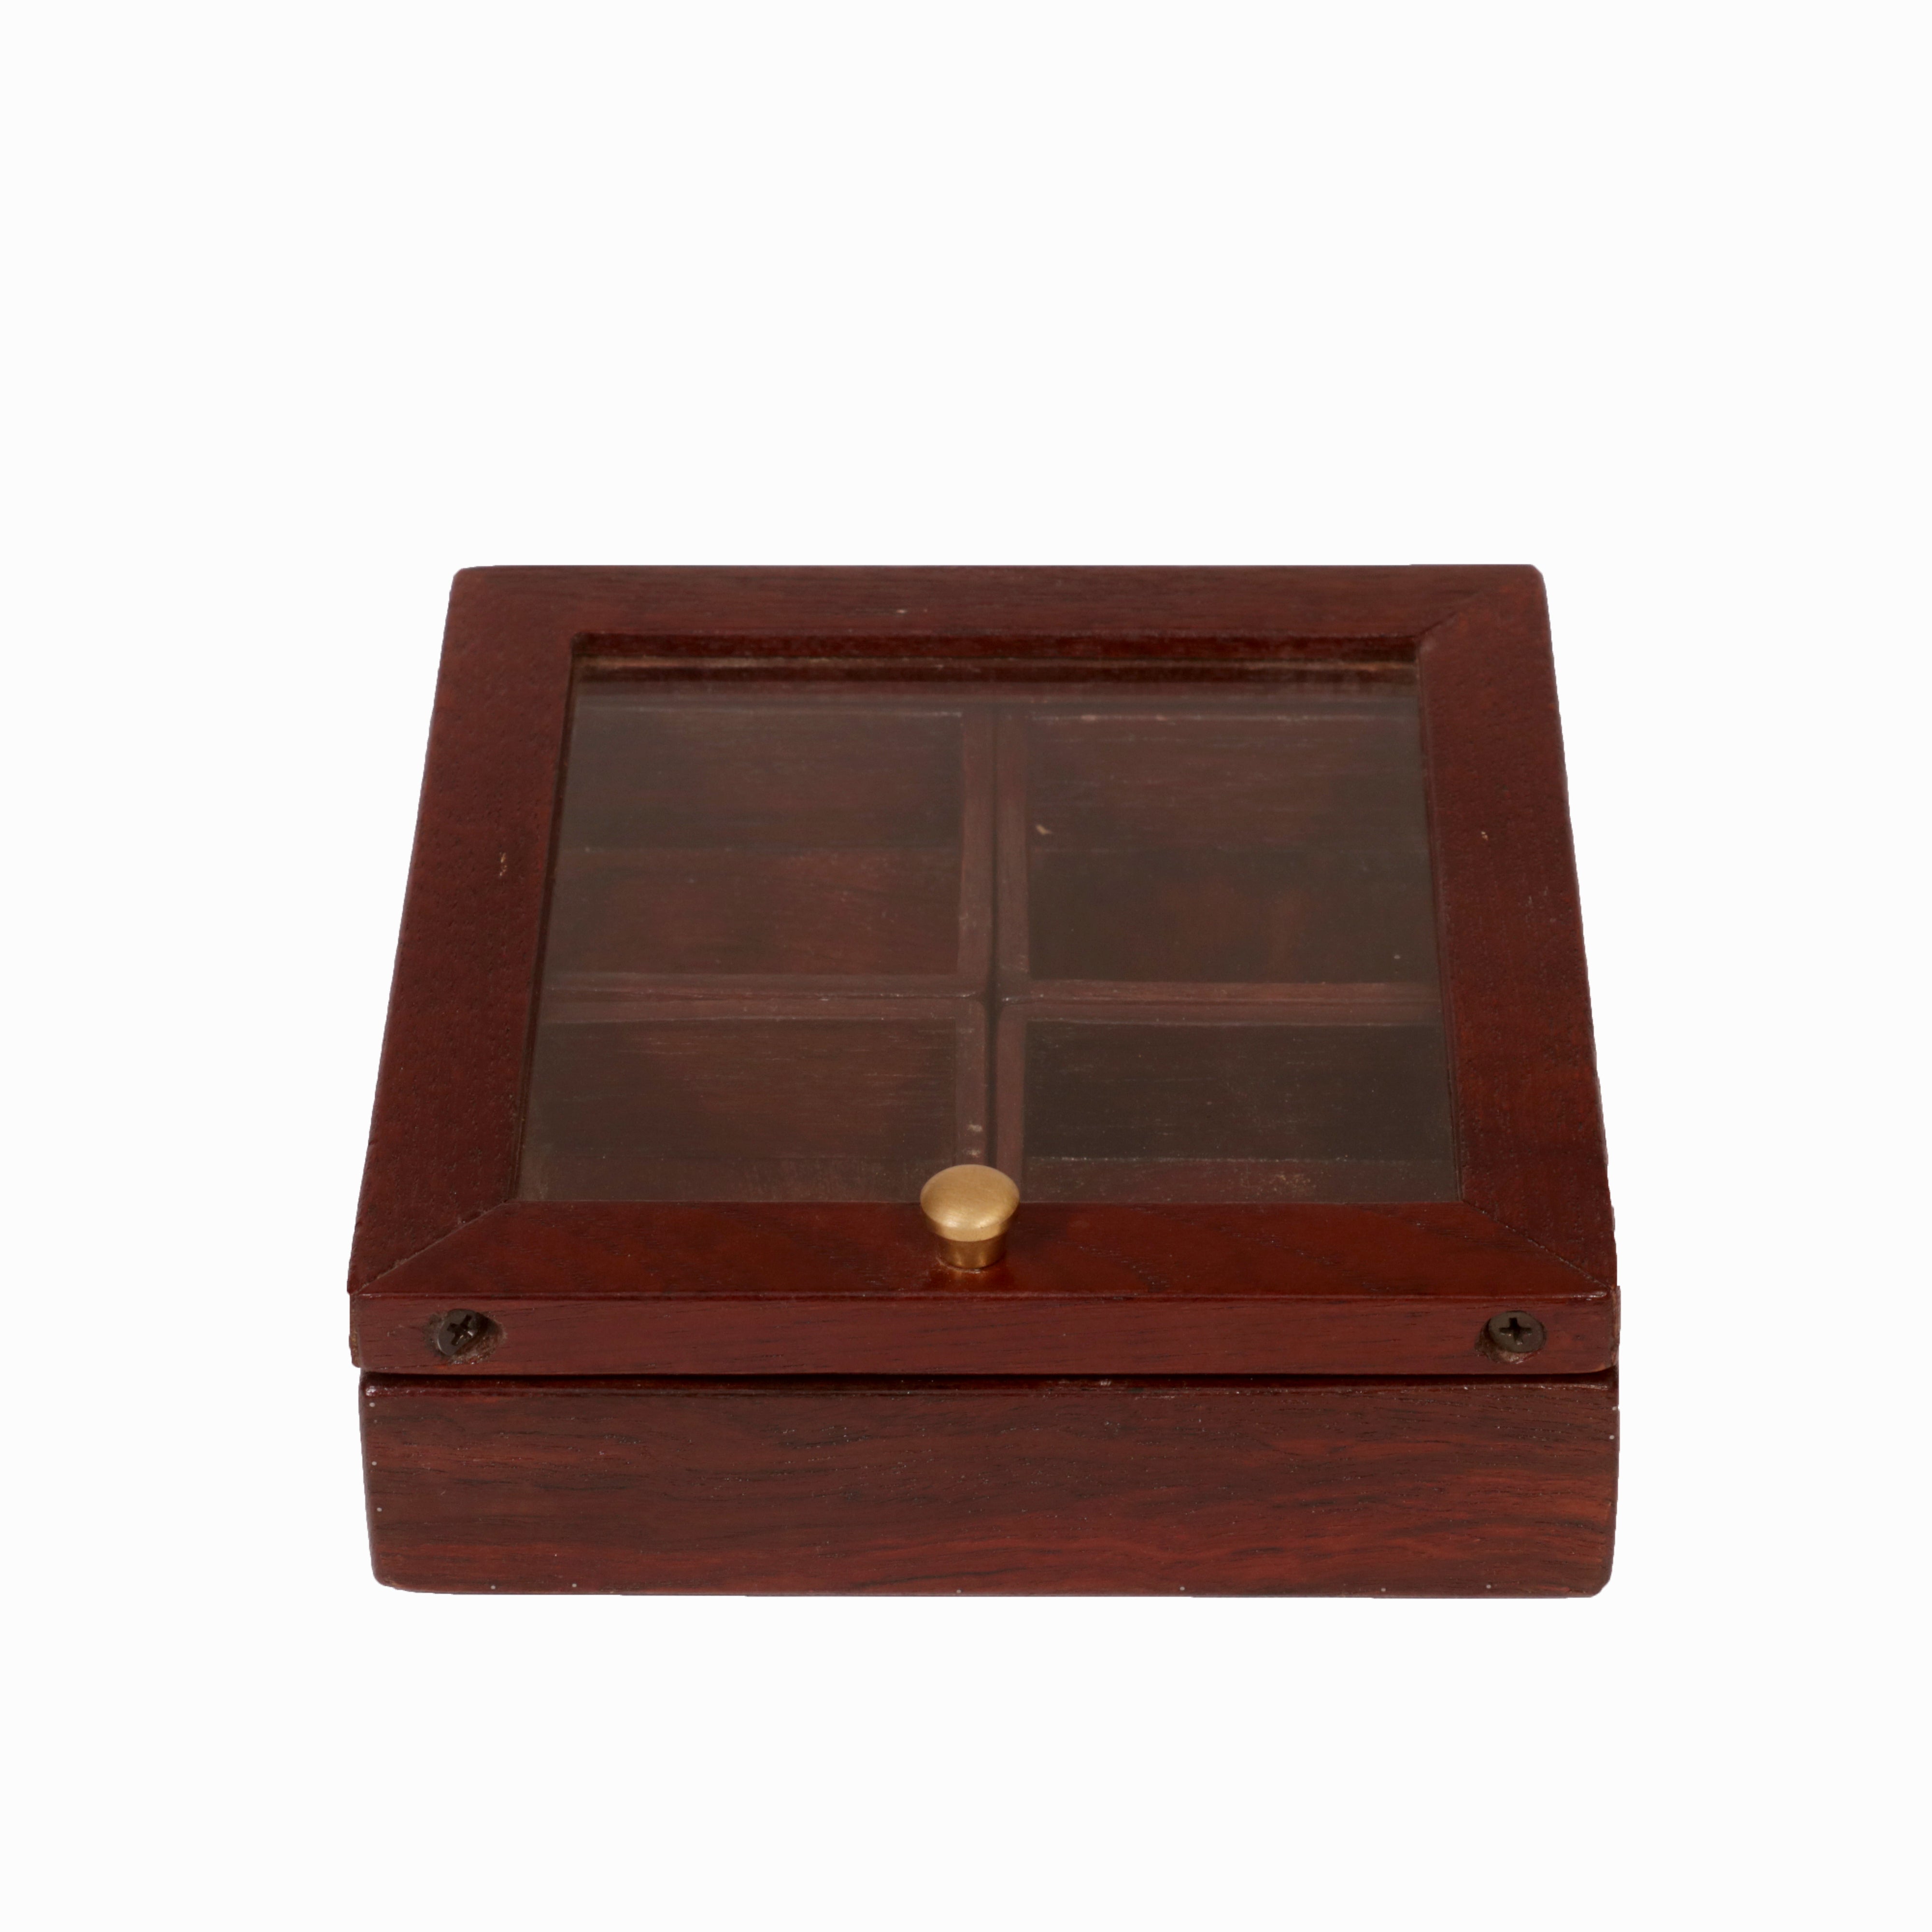 Solid Indian Teak wood Masala Box Wooden Box